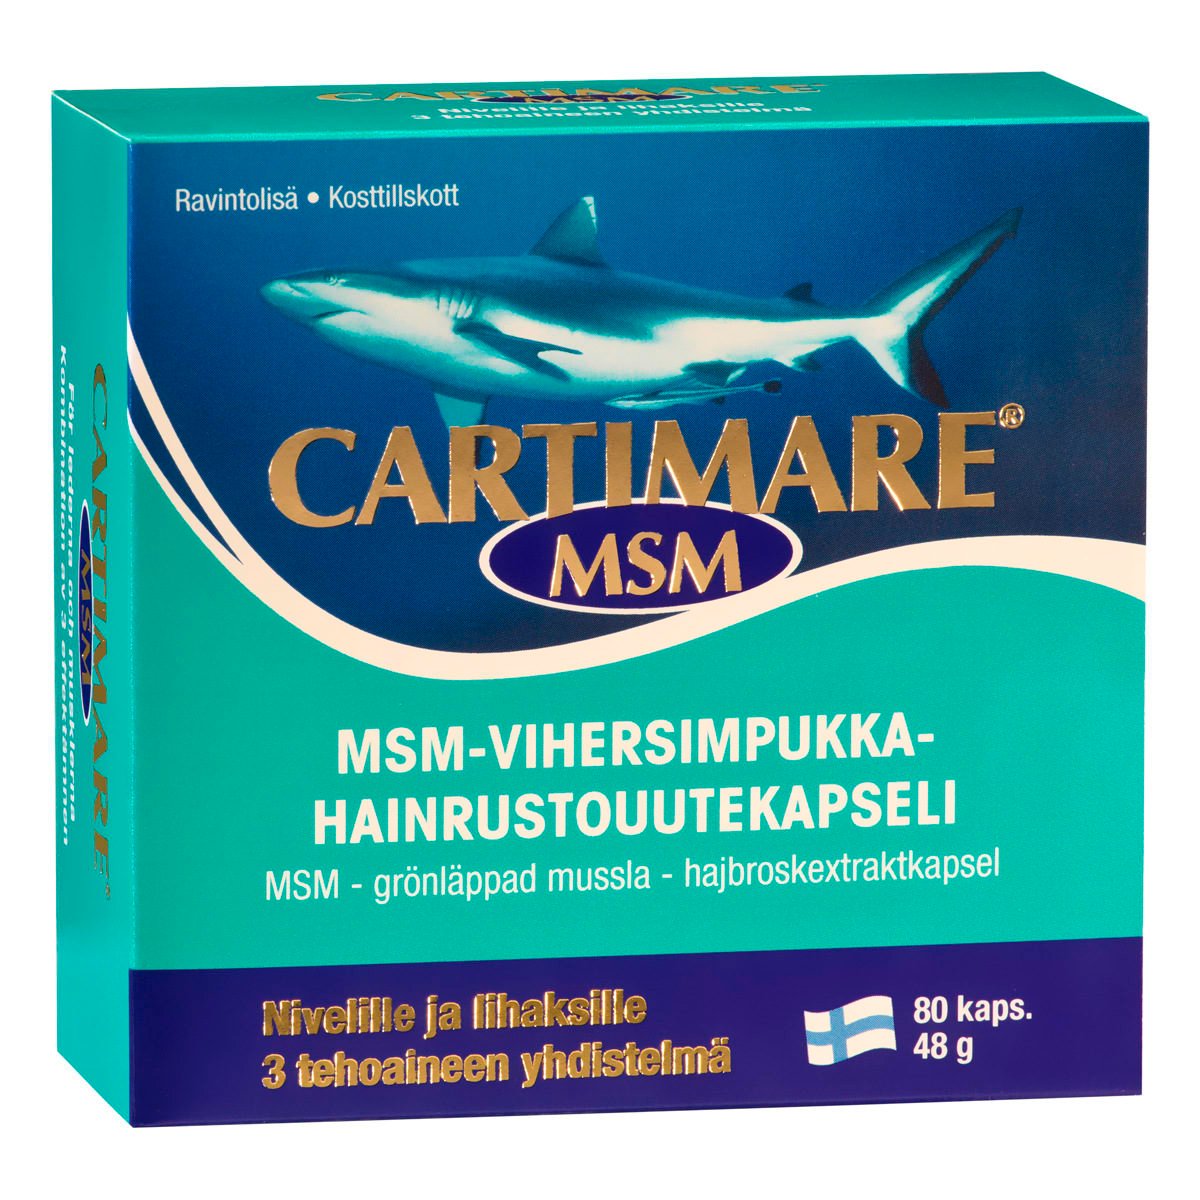 Cartimare MSM 80 kaps./48g